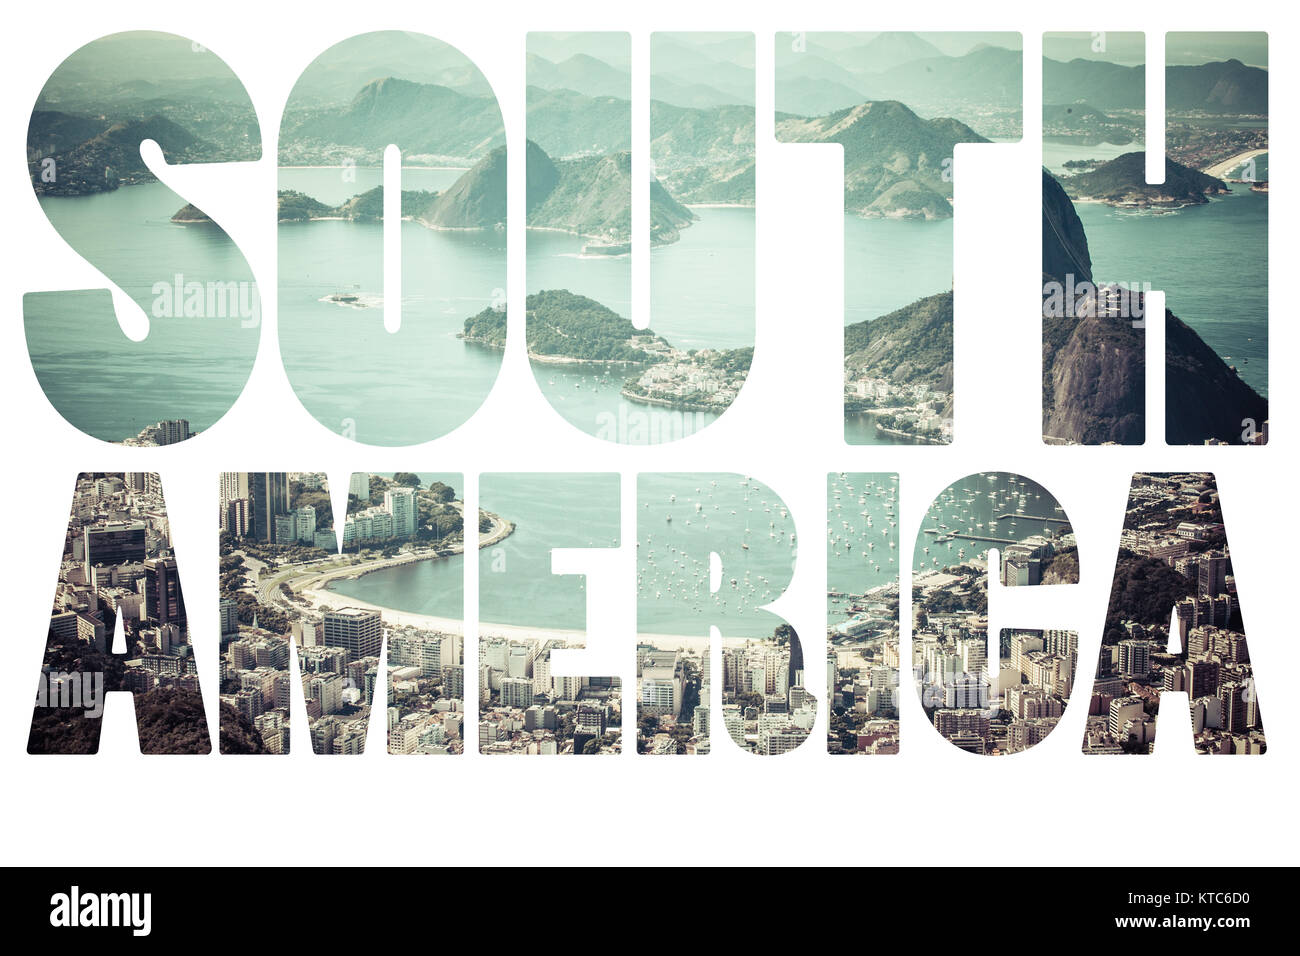 Word South America in Rio de Janeiro, Brazil. Stock Photo